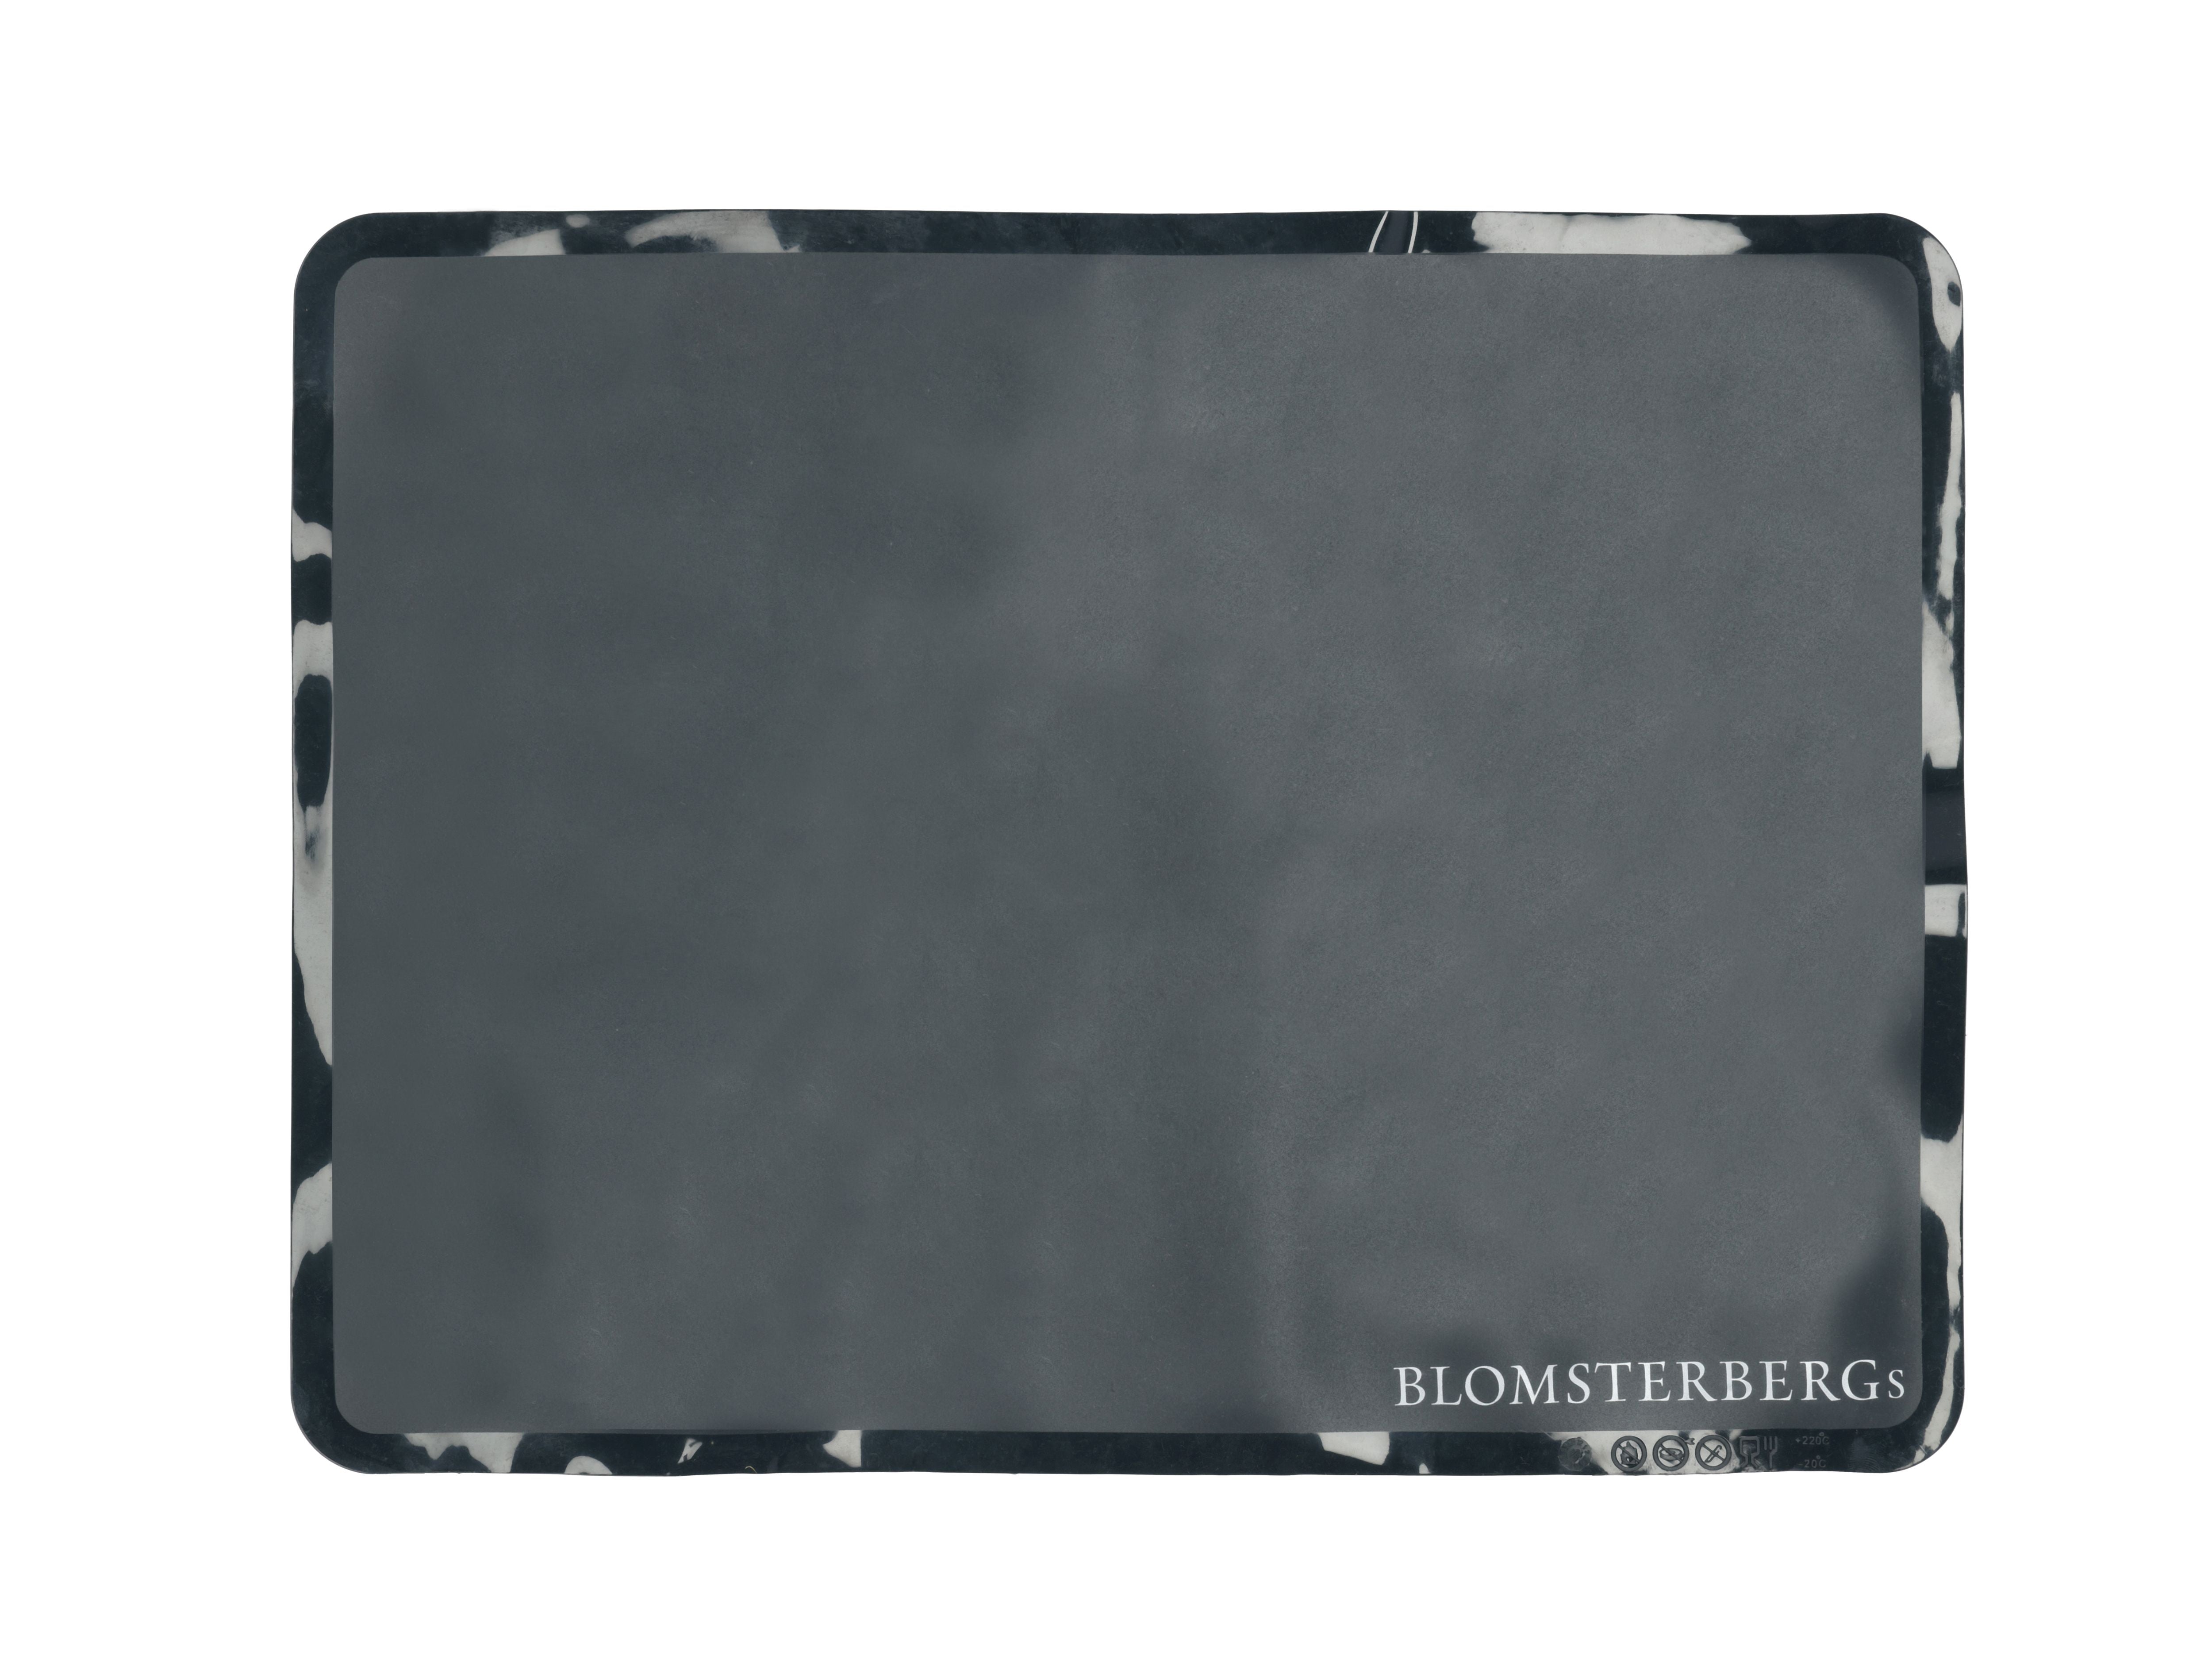 Blomsterbergs Backmatte 30x40, Grau